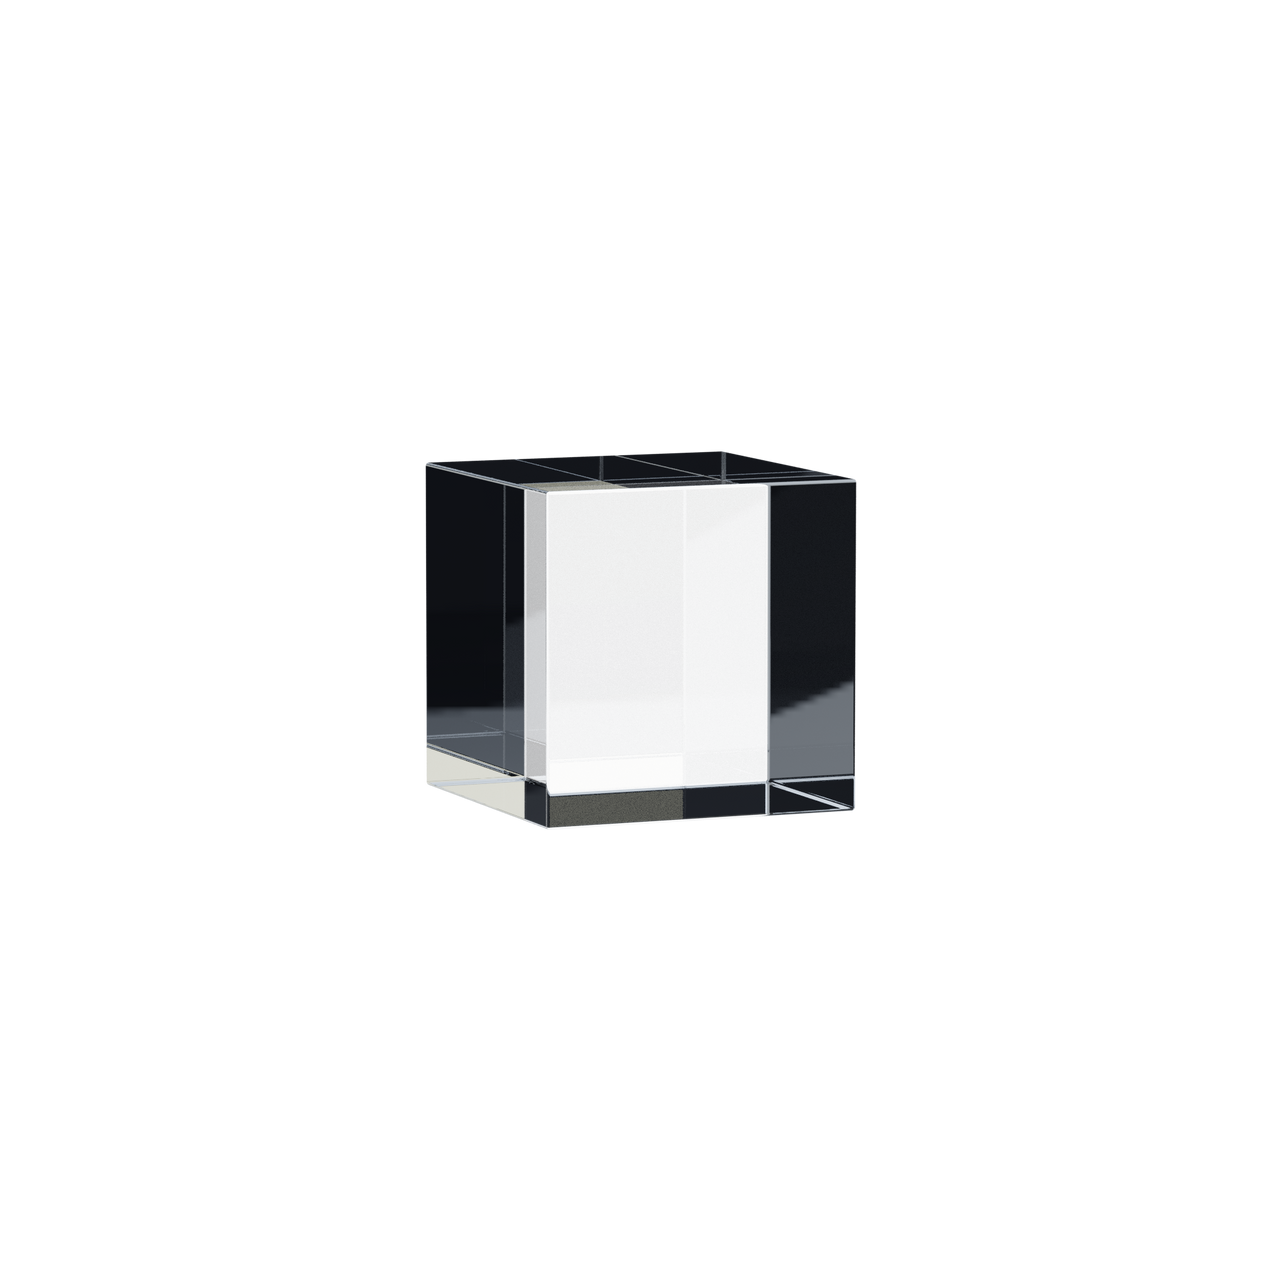 Black (Translucent) Acrylic Cubes (8mm)